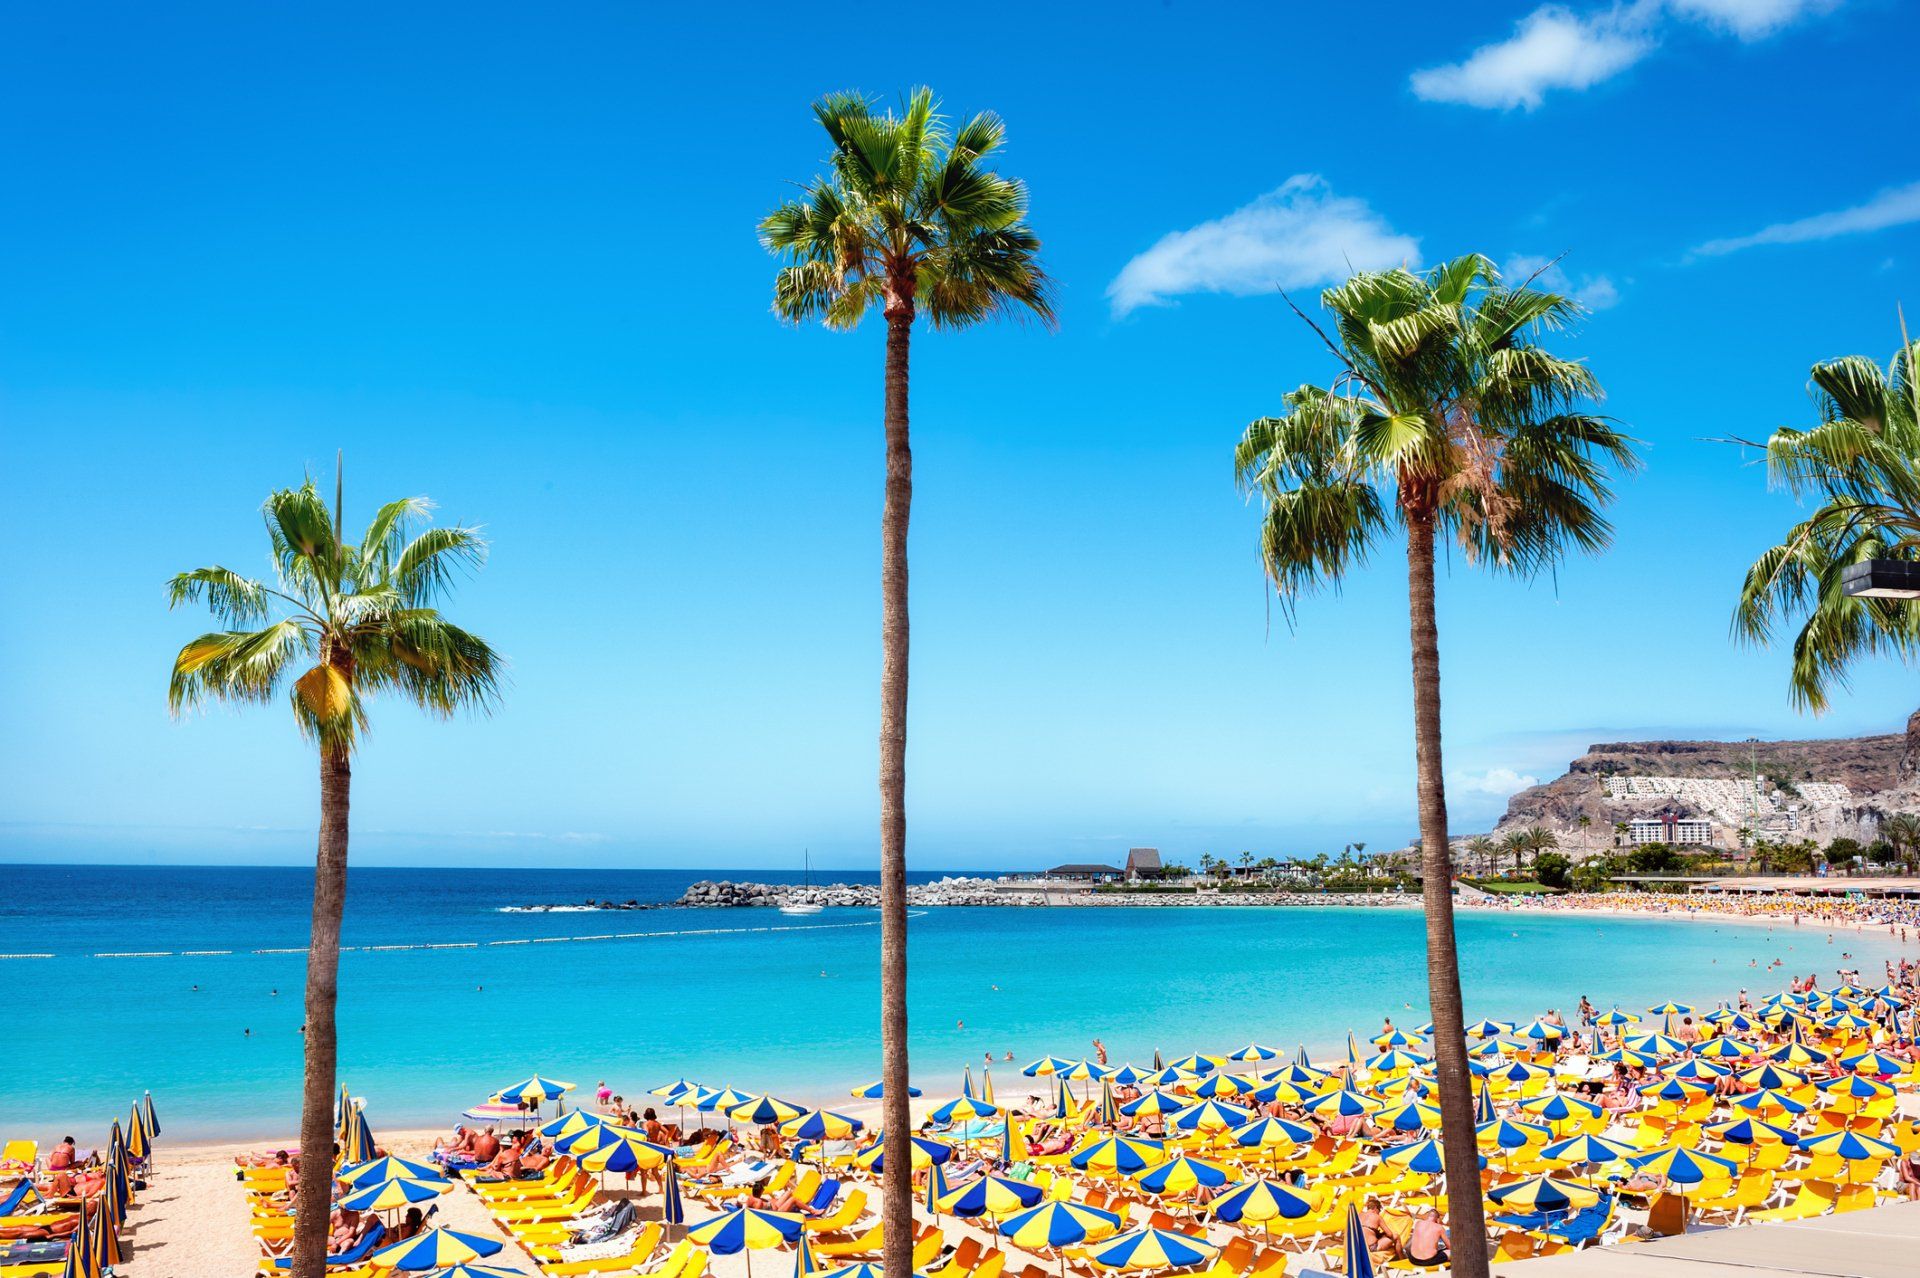 Holidays to Gran Canaria